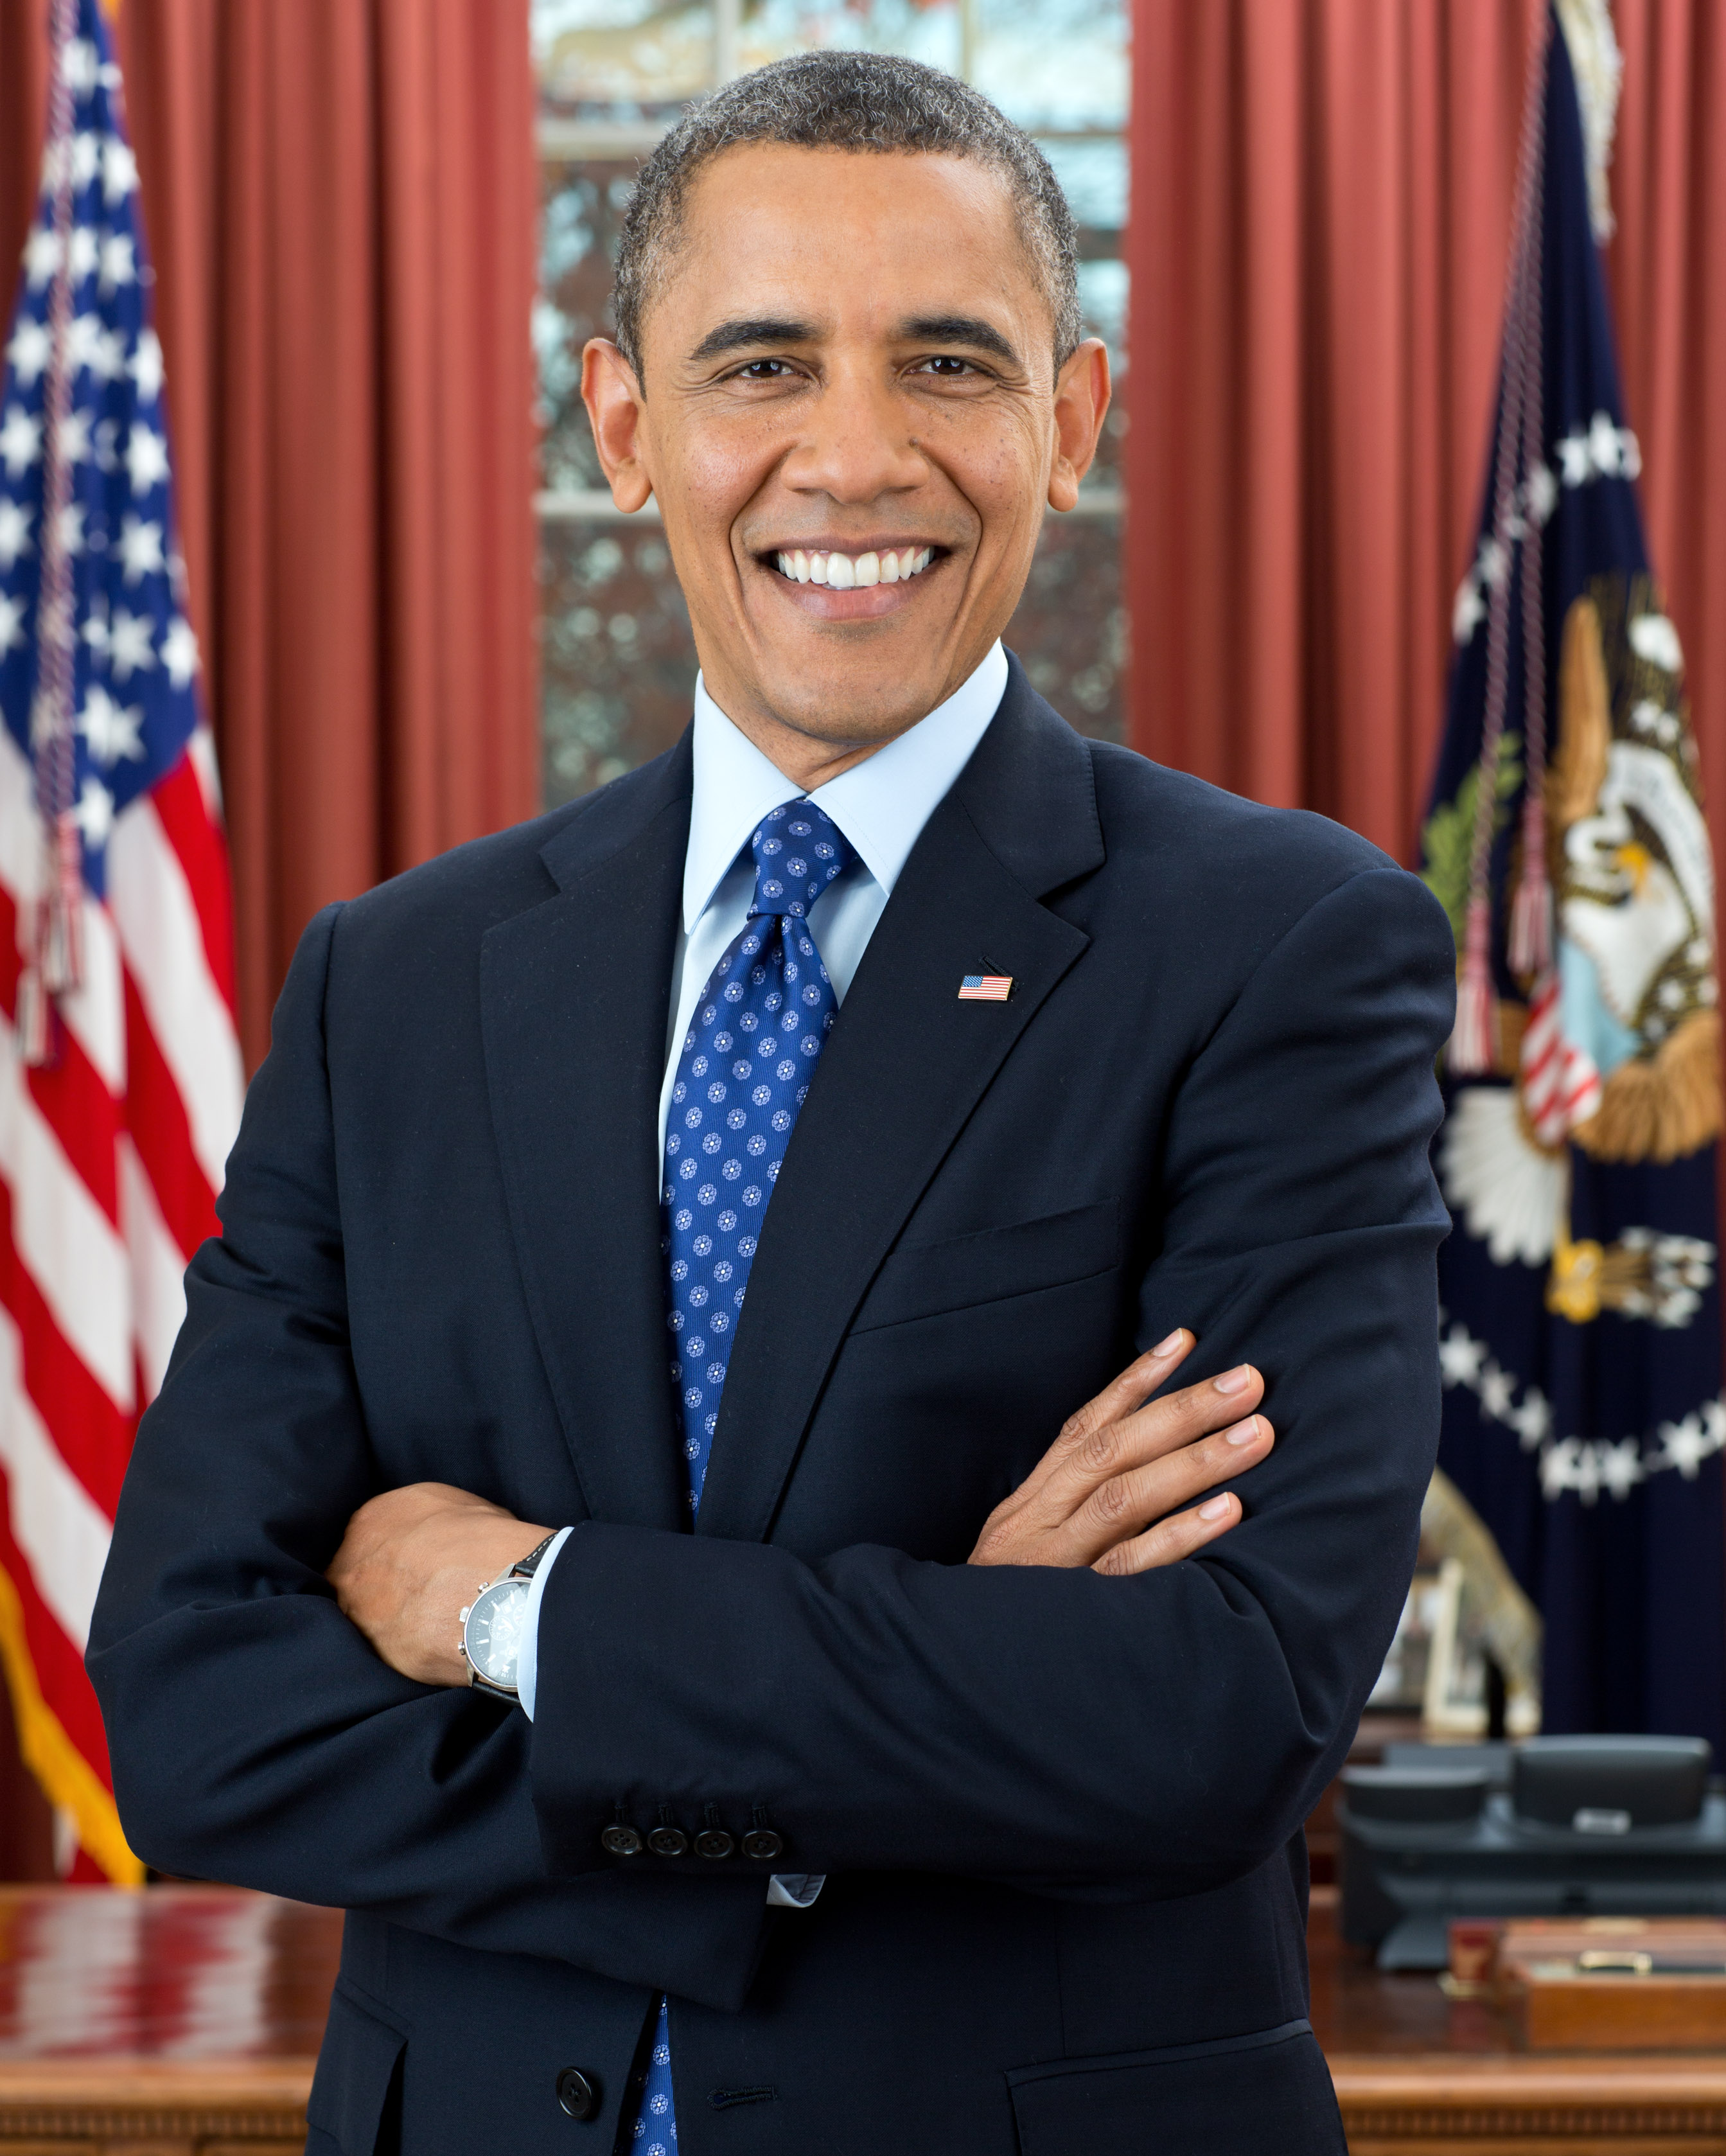 President Barack Obama, 44th President of the United States